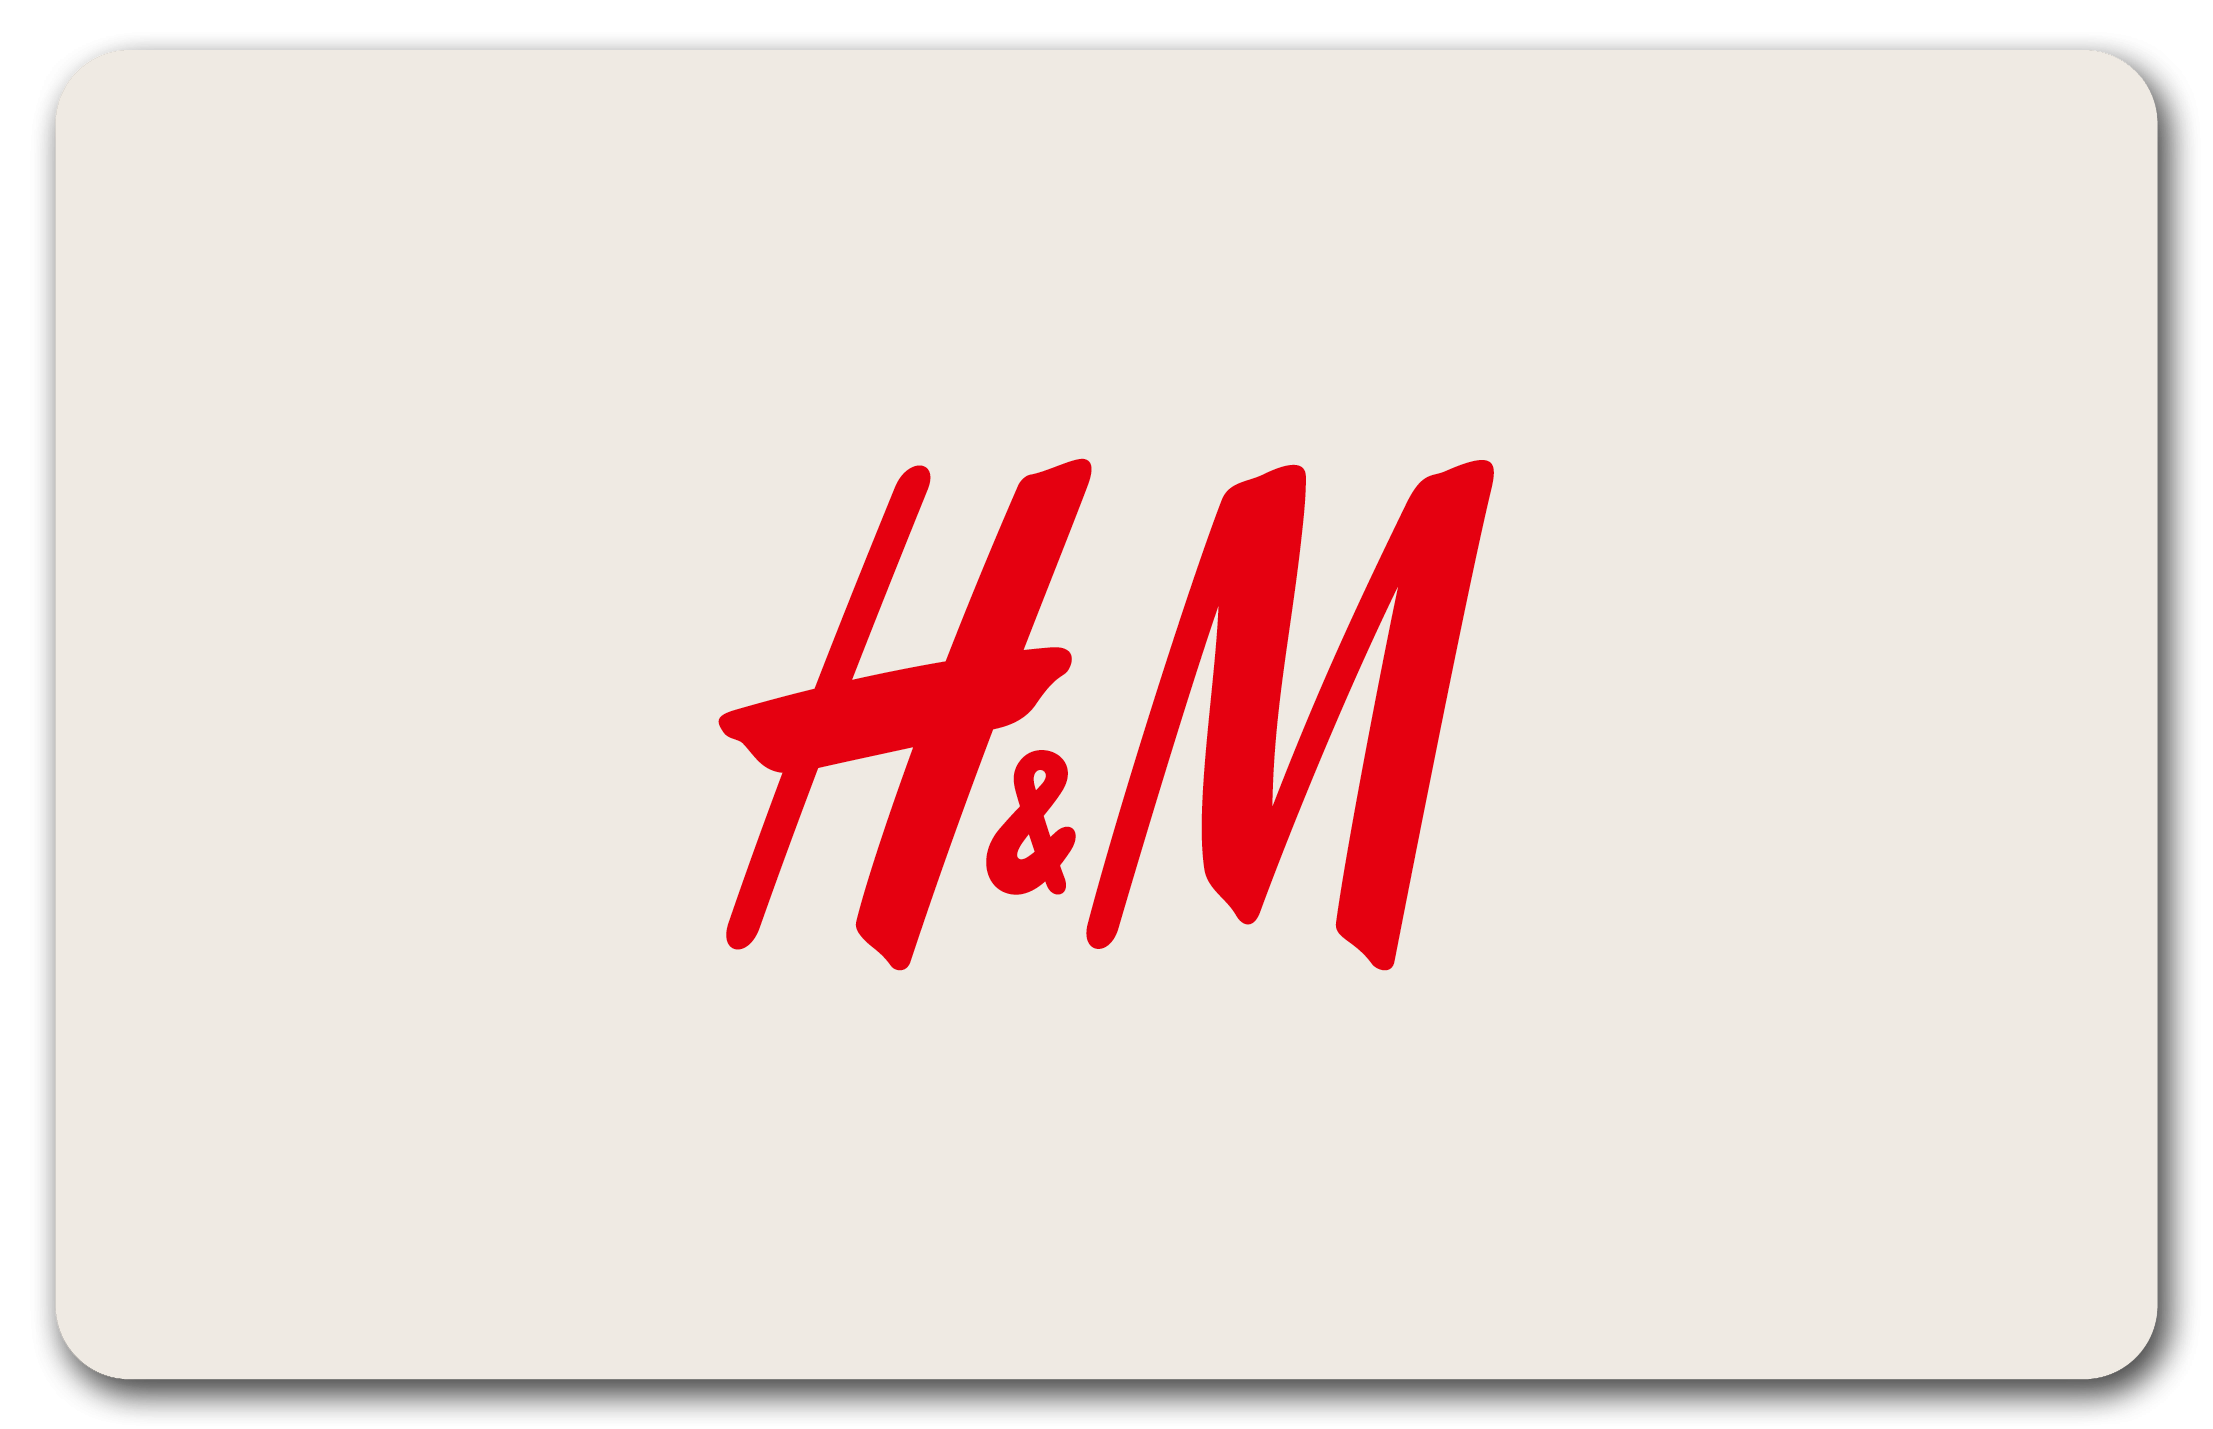 H&M Anglet